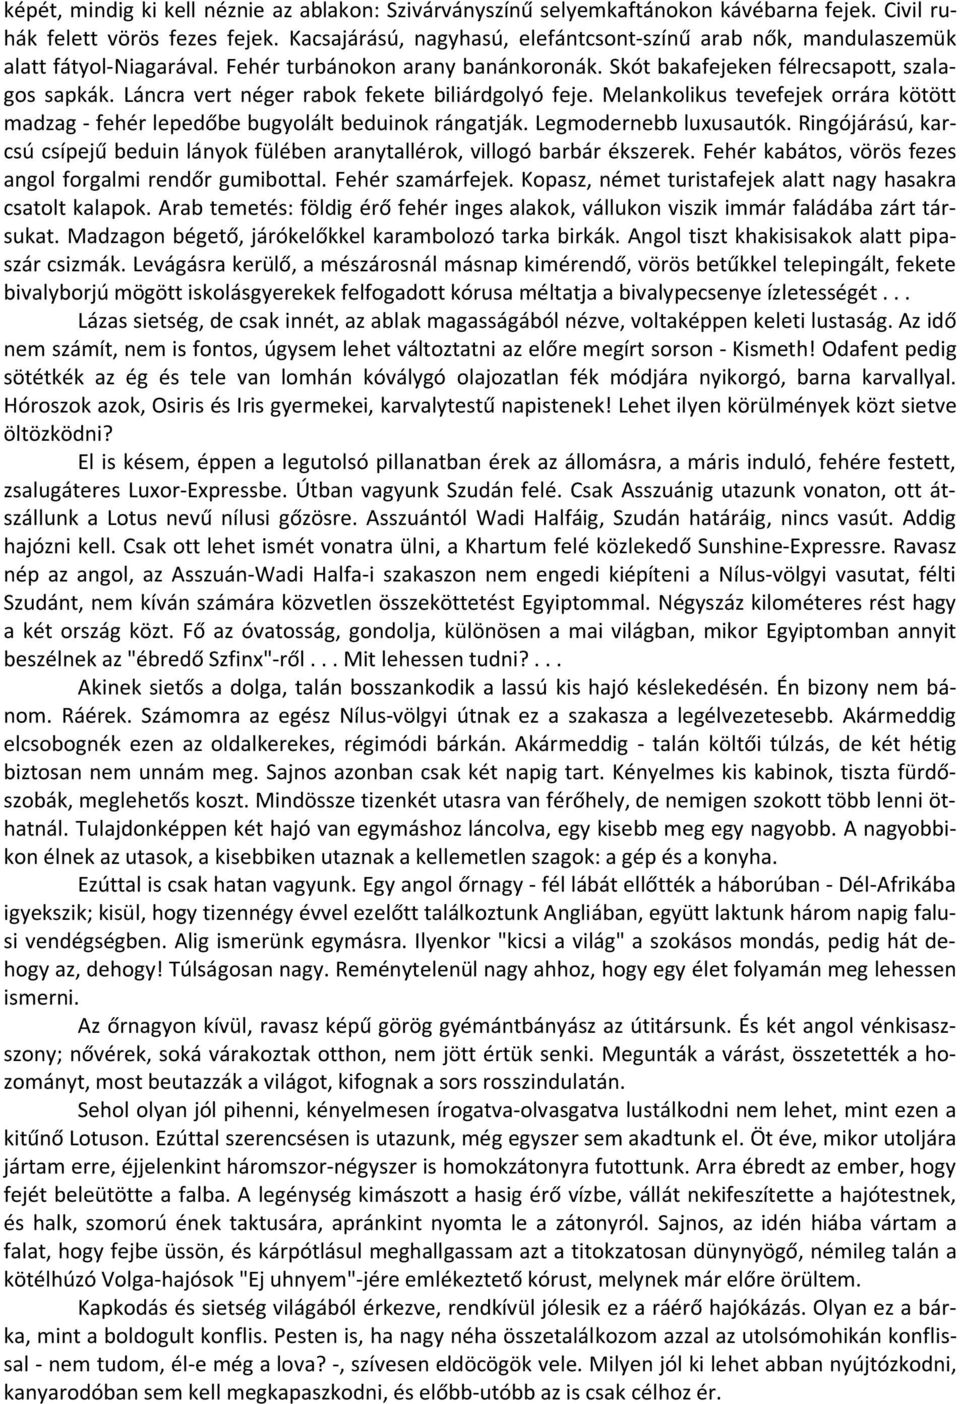 SZÉCHENYI ZSIGMOND: HENGERGŐ HOMOK - PDF Free Download